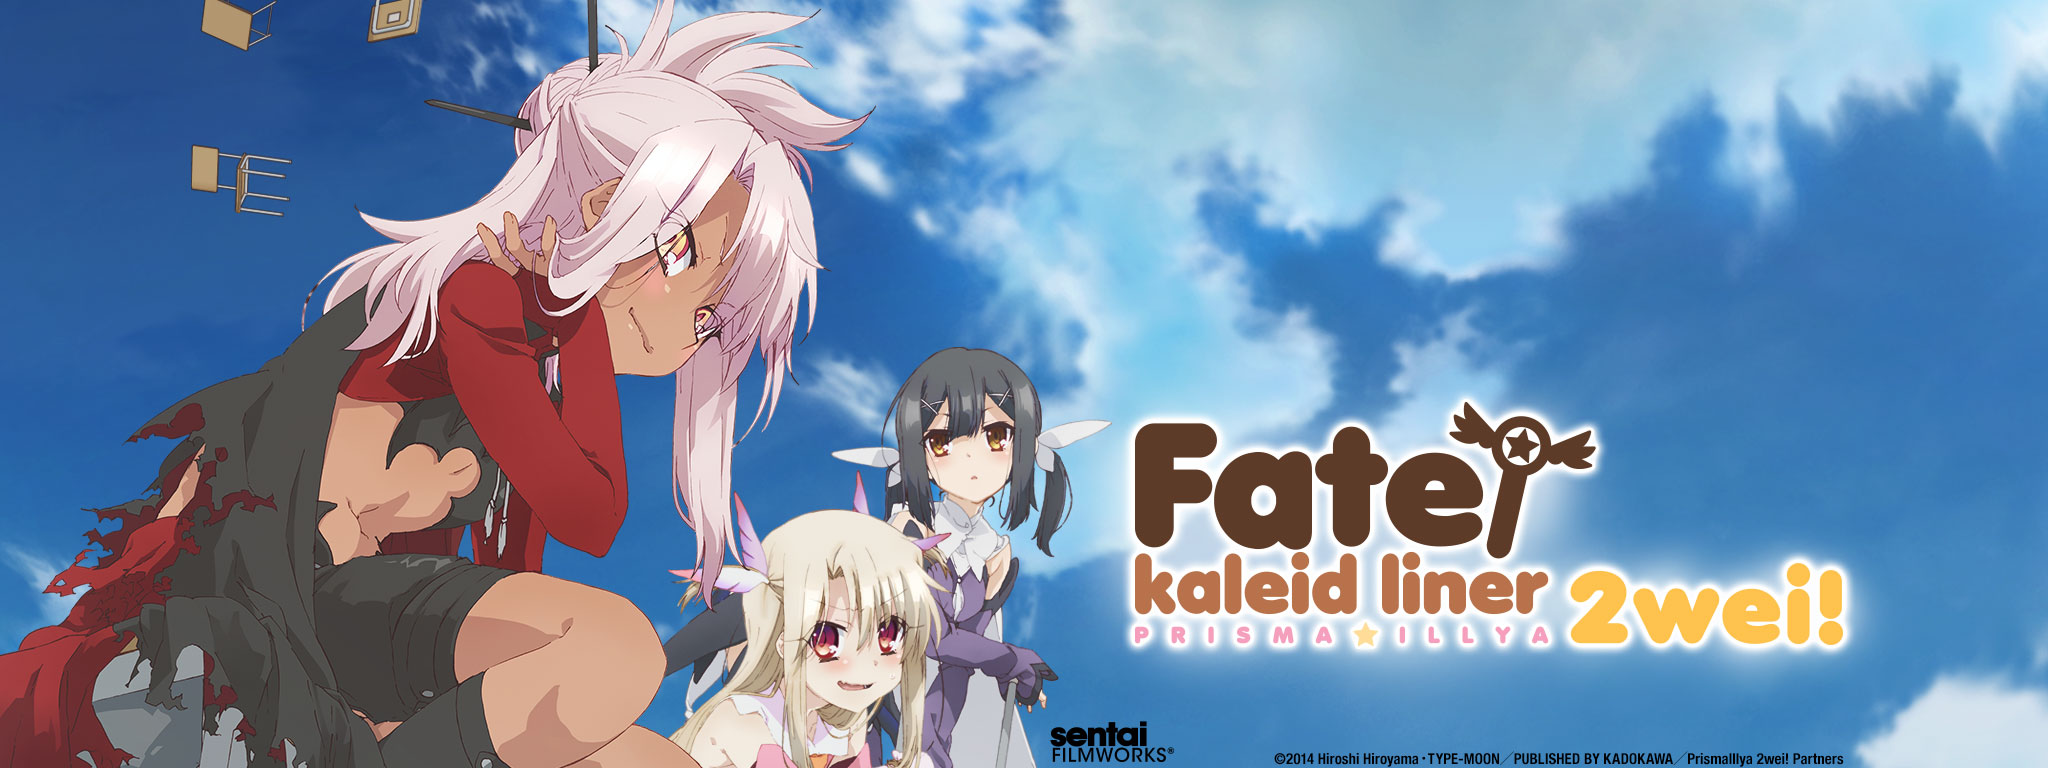 Title Art for Fate/Kaleid Liner Prisma Illya 2wei!